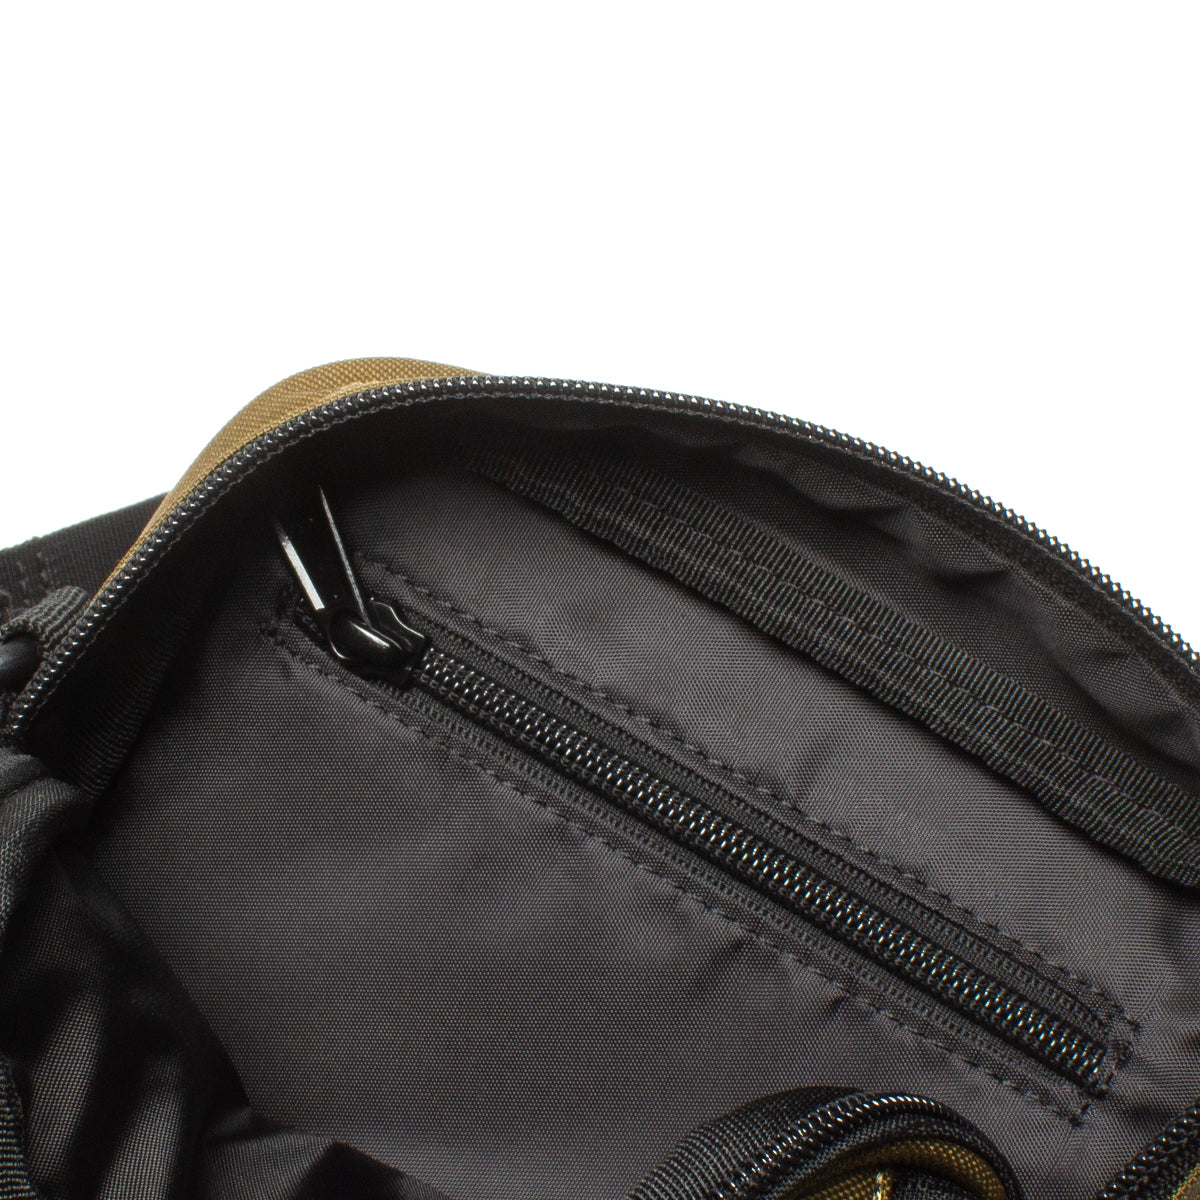 Small Essentials Bag Black, Carhartt WIP